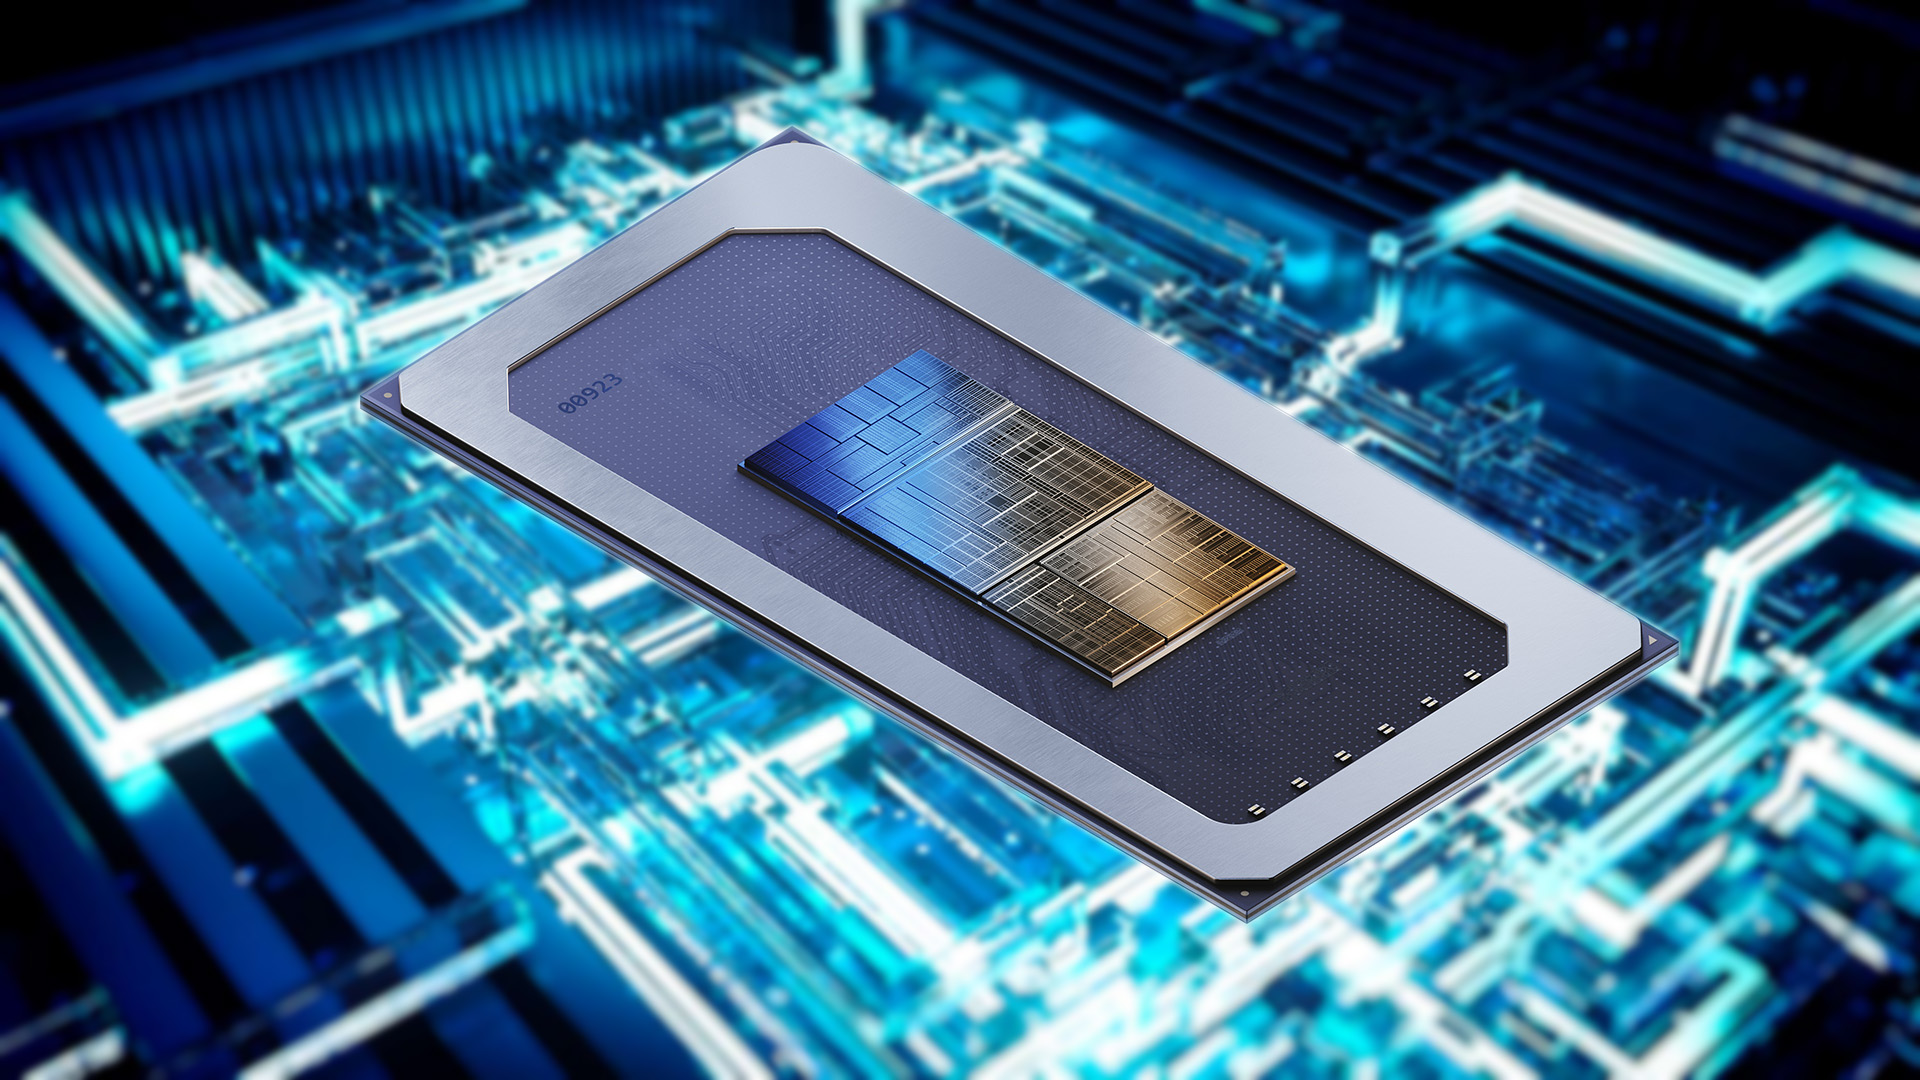 Asus Reveals New Mini-PC Packing an Intel Meteor Lake CPU